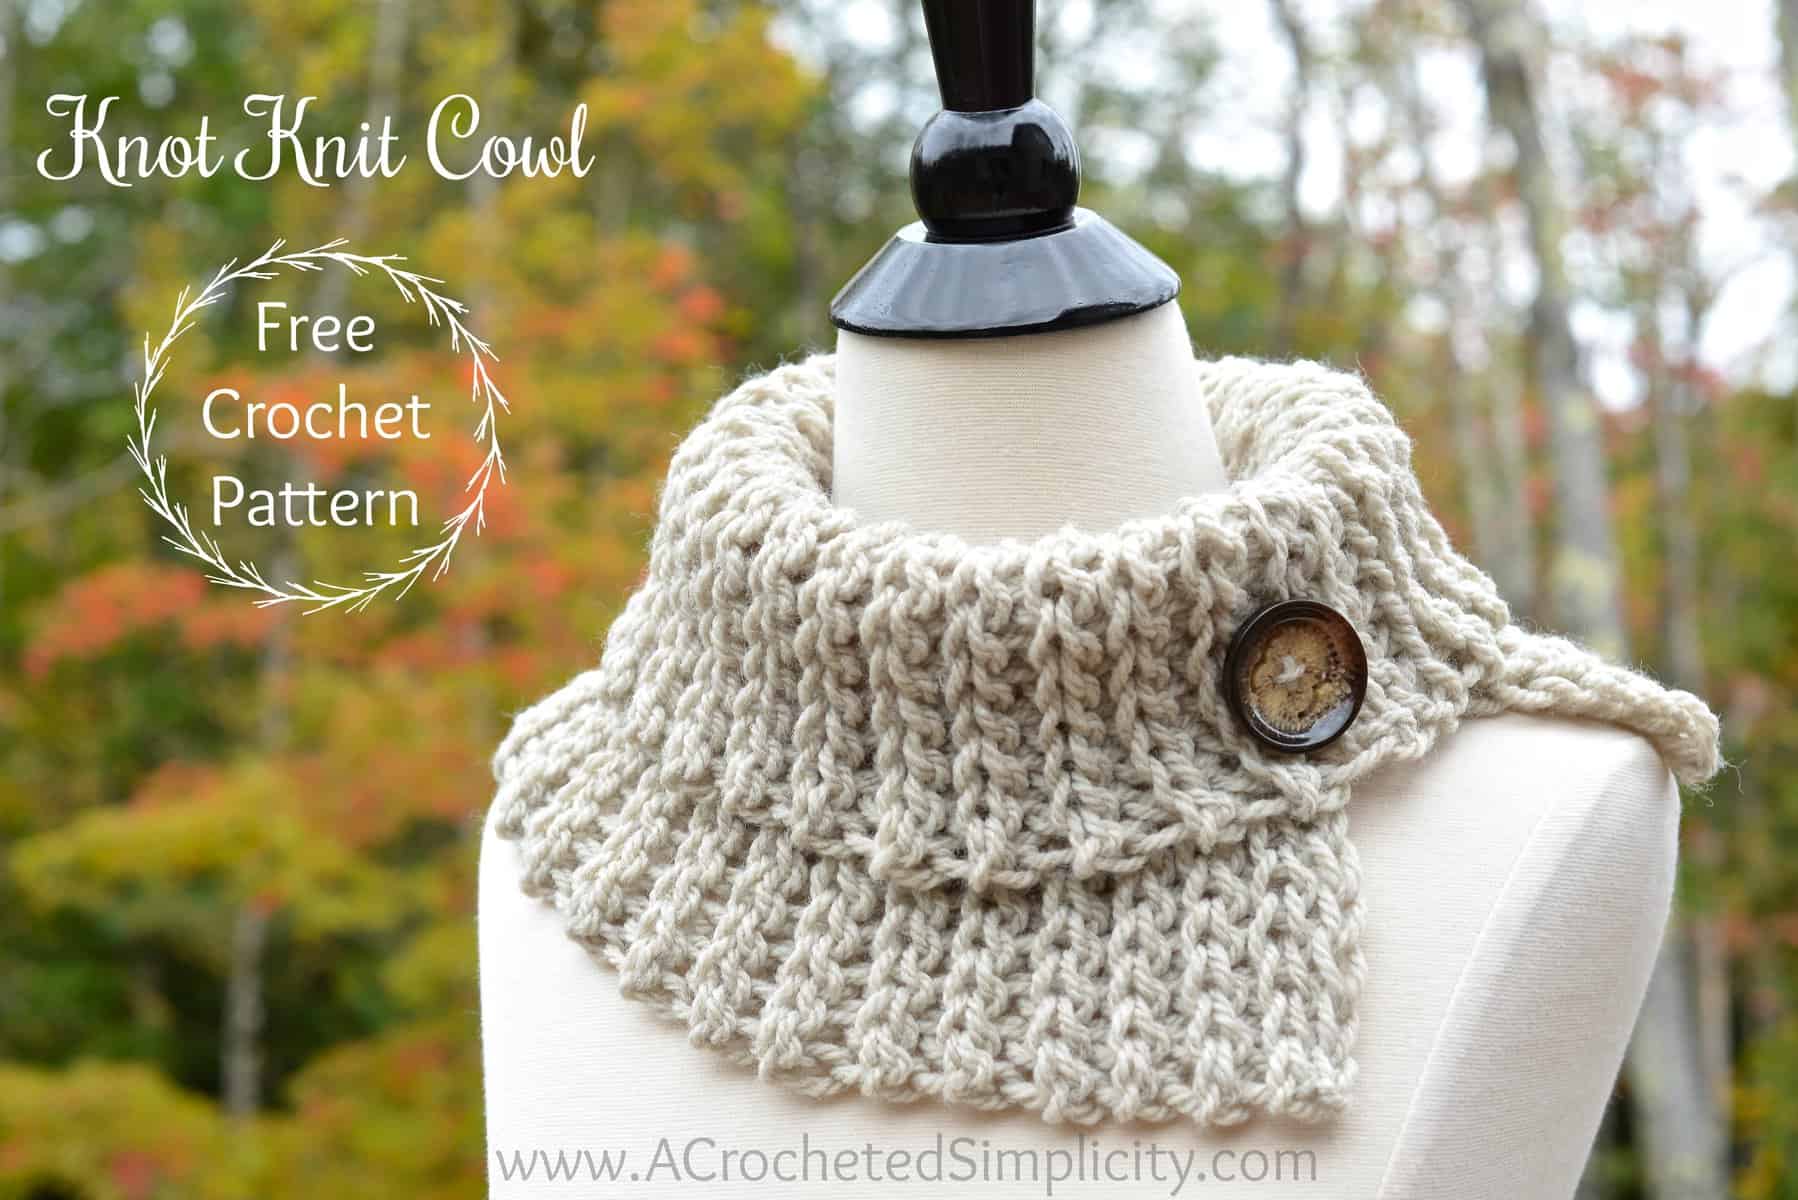 Free Crochet Pattern Knot Knit Cowl A Crocheted Simplicity